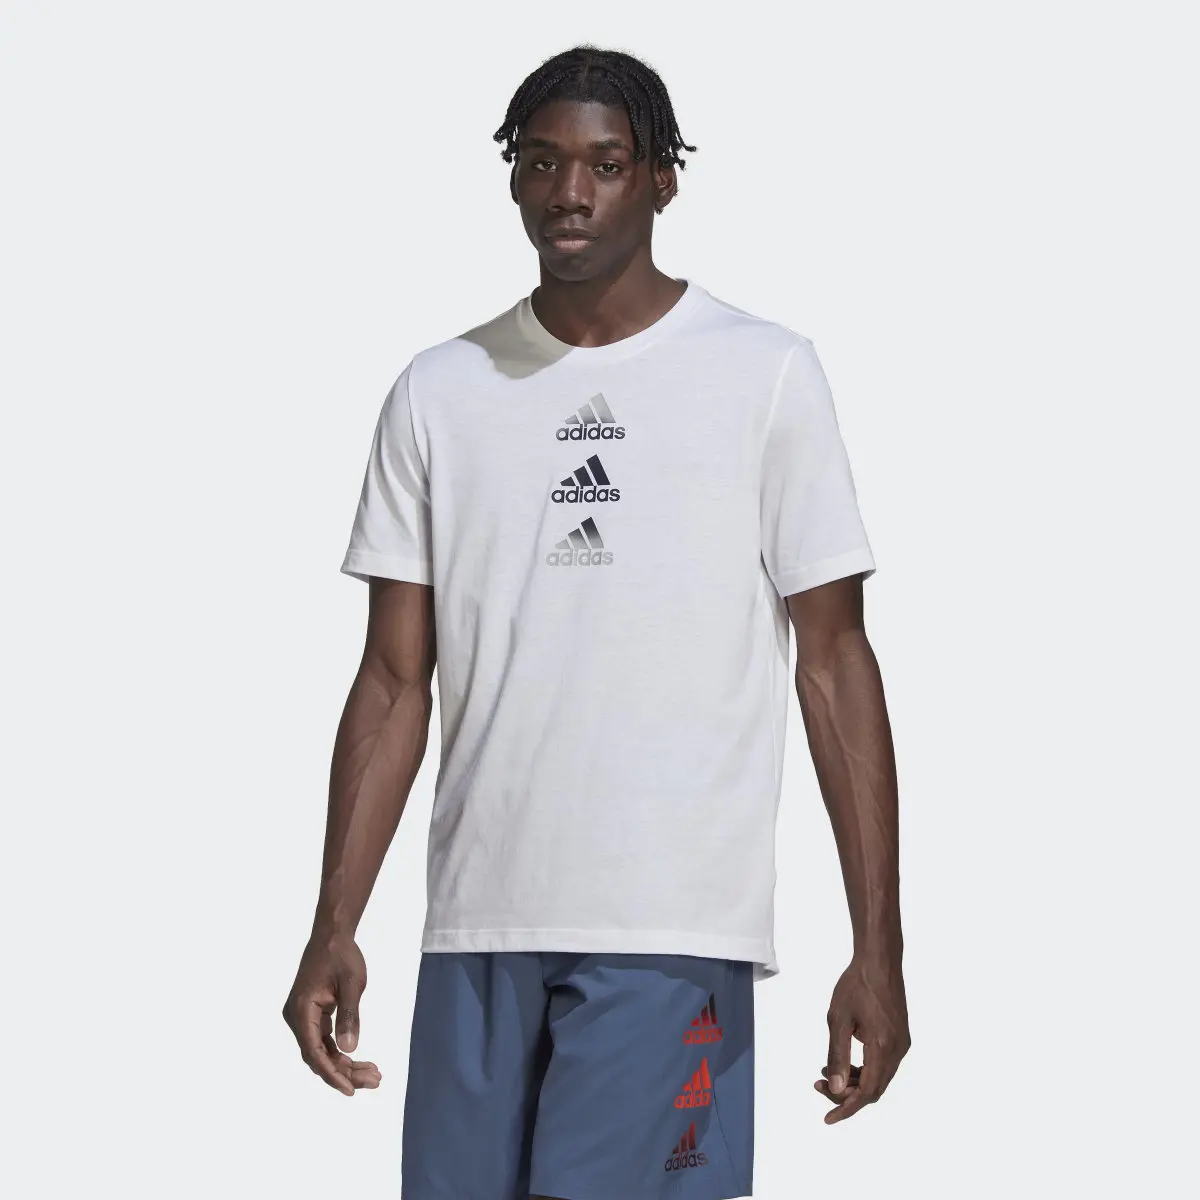 Adidas T-shirt Designed to Move. 2